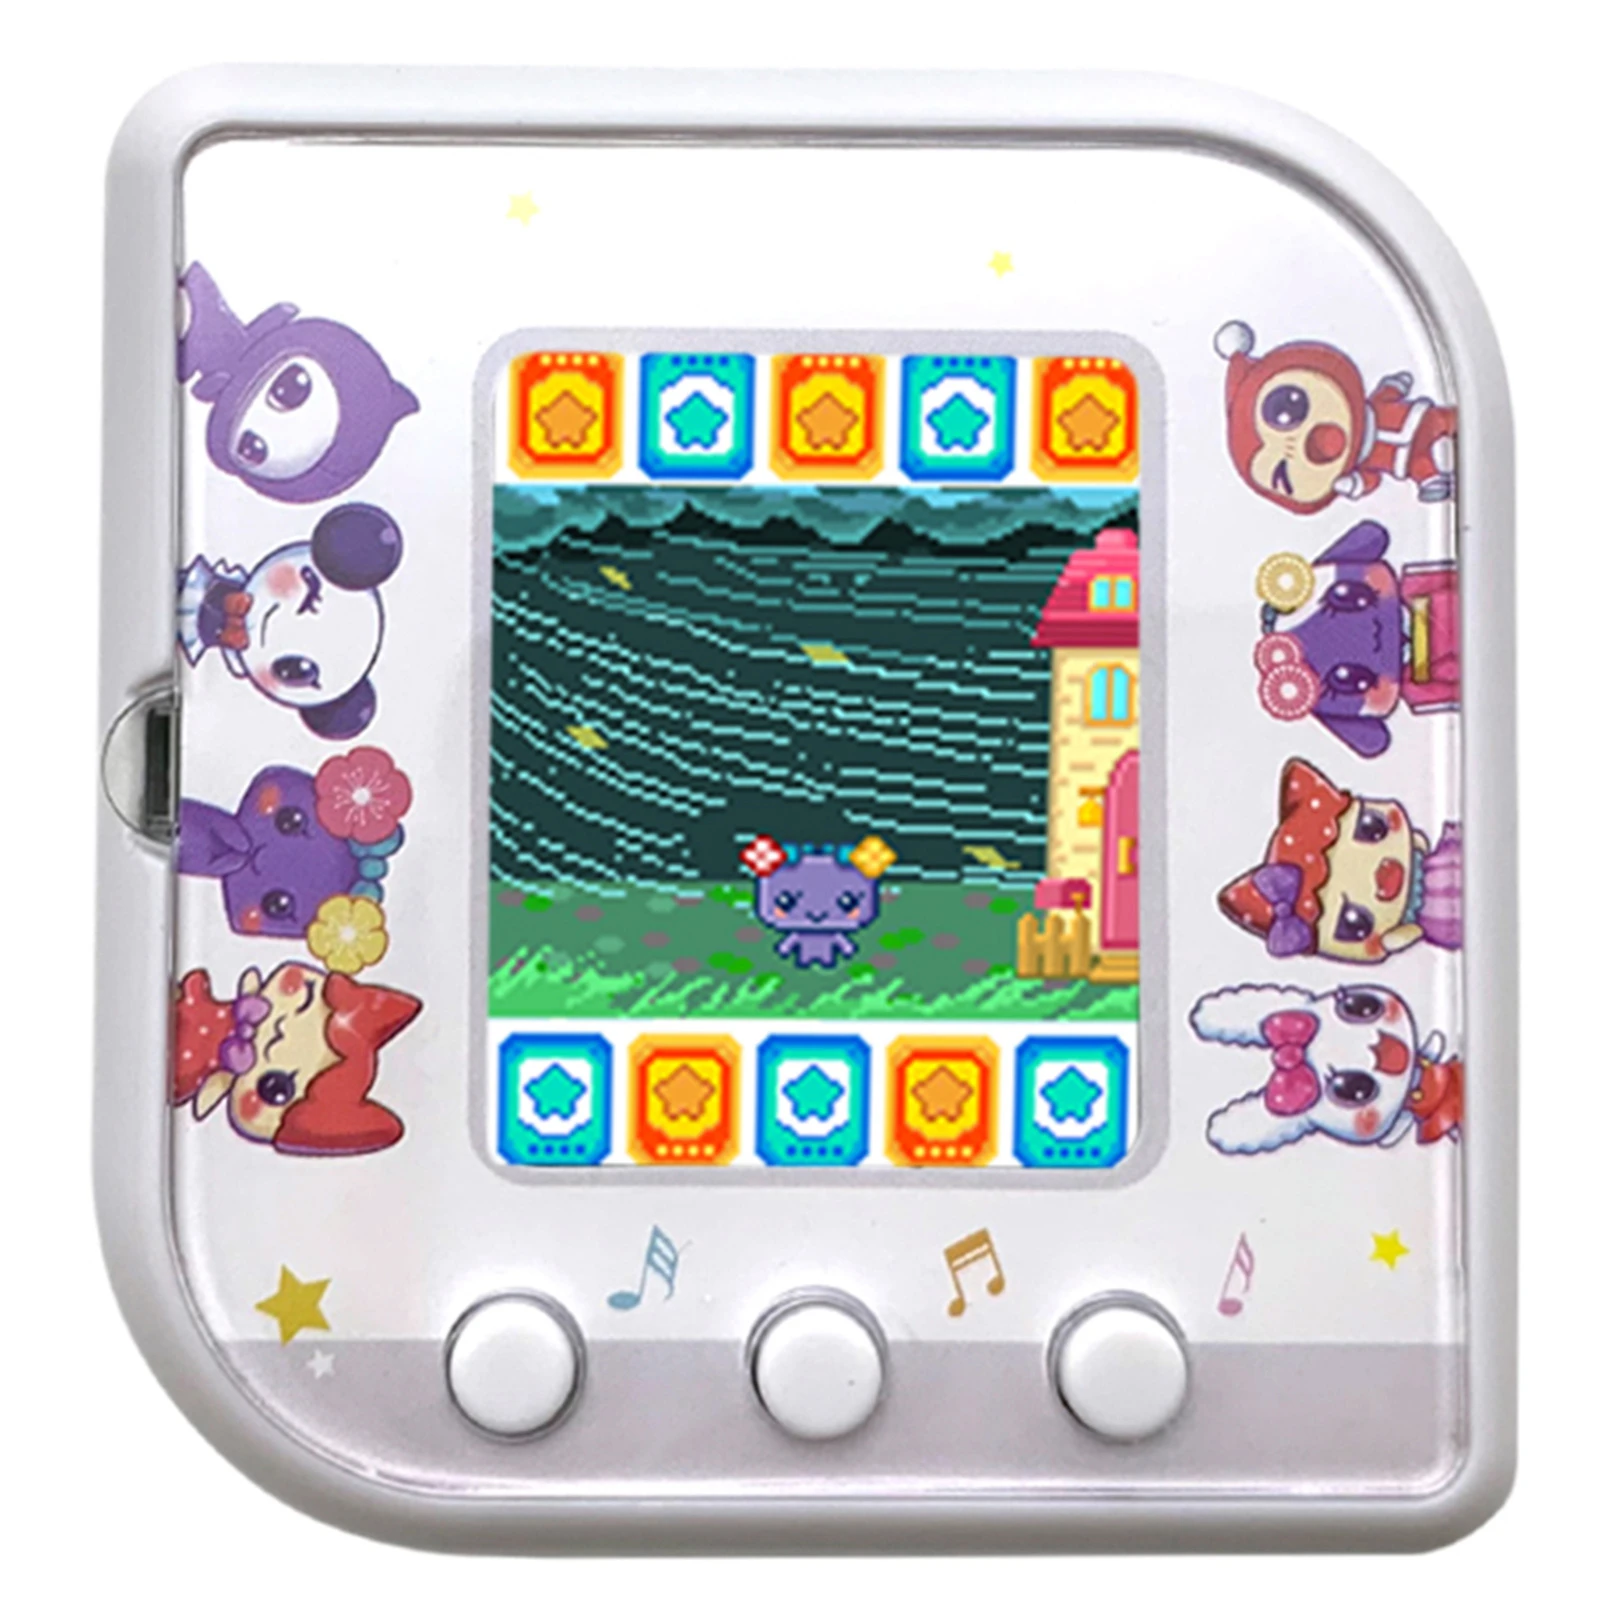 Square-Cartoon-Pet-Game-Machine-Virtual-Electronic-Child-Handheld-Pet-Game-Machine-Color-Display-Screen-Kids.jpg_Q90.jpg_.webp